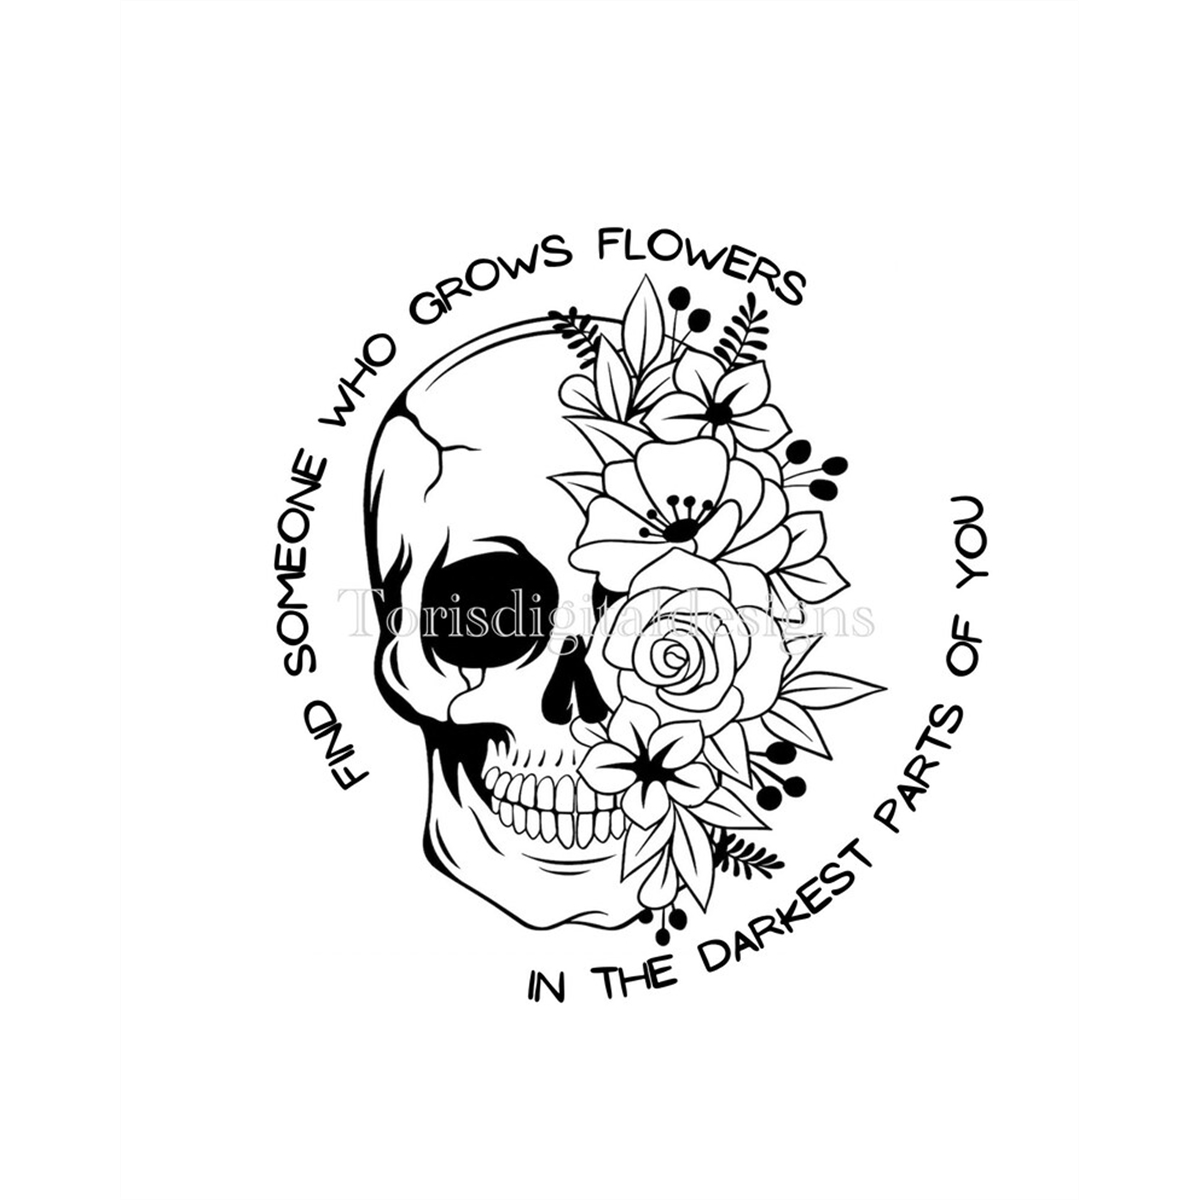 flowered-skull-lyrics-svg-image-1